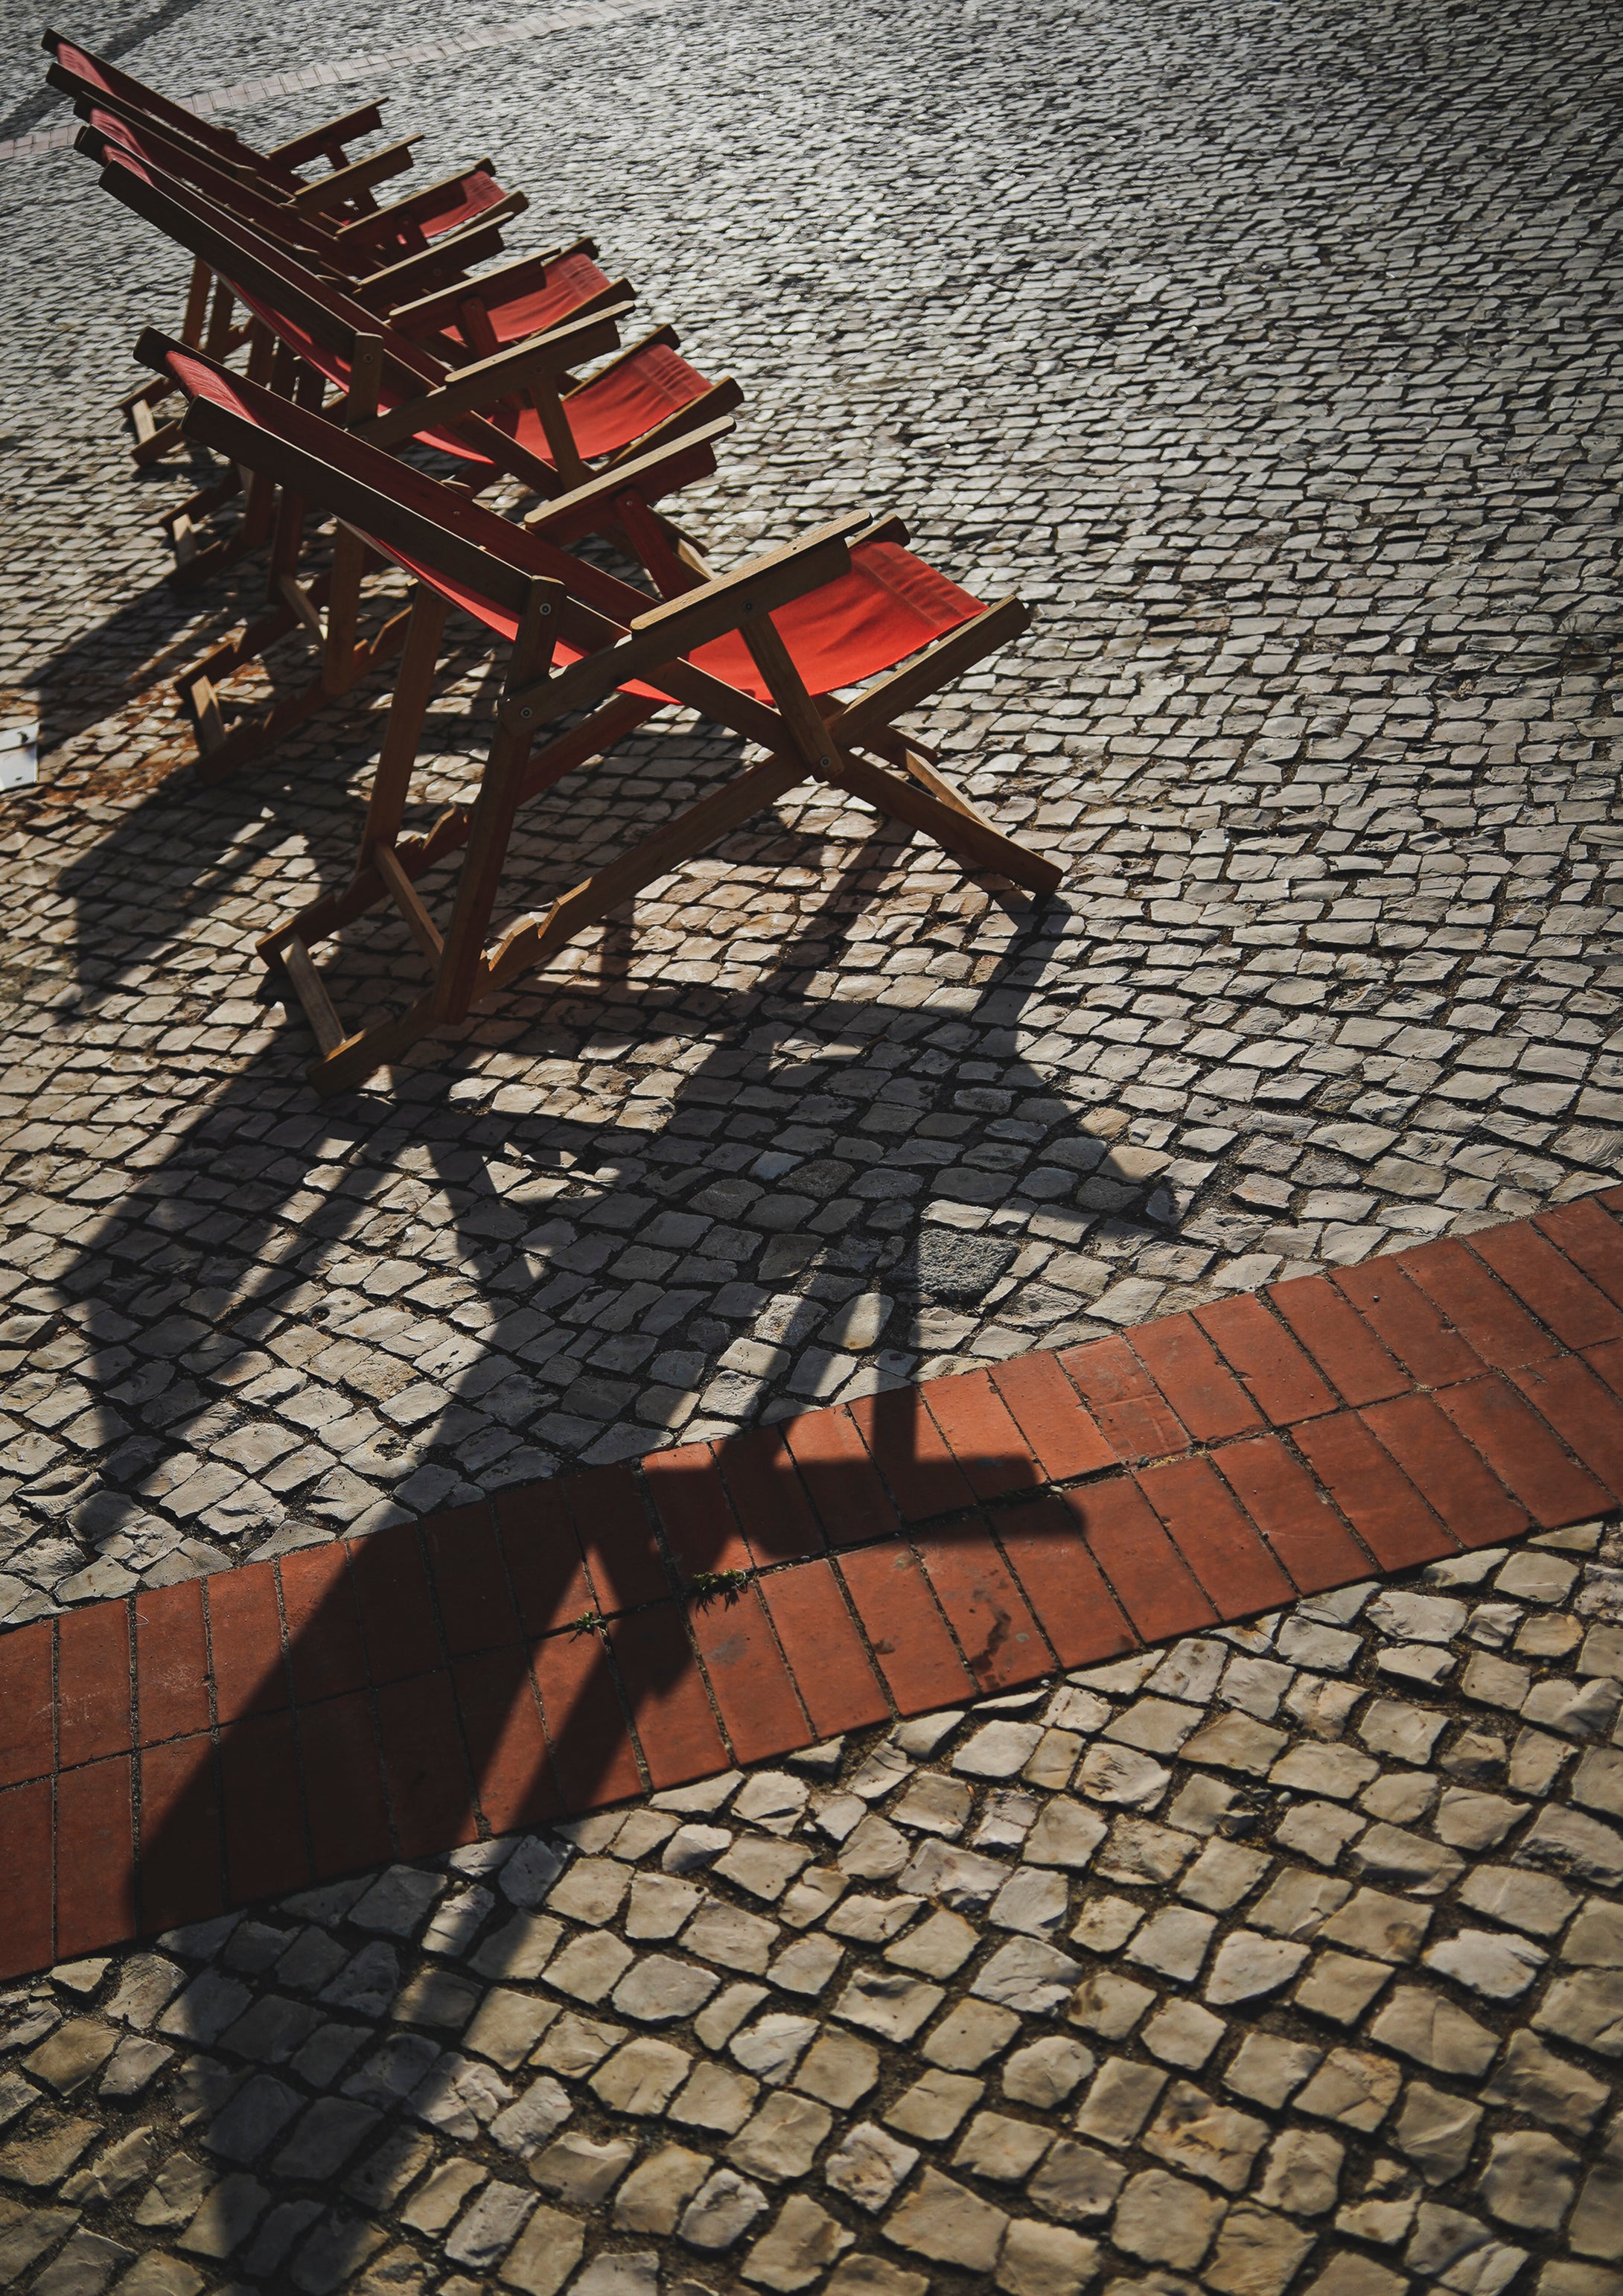 Algarve deck chairs